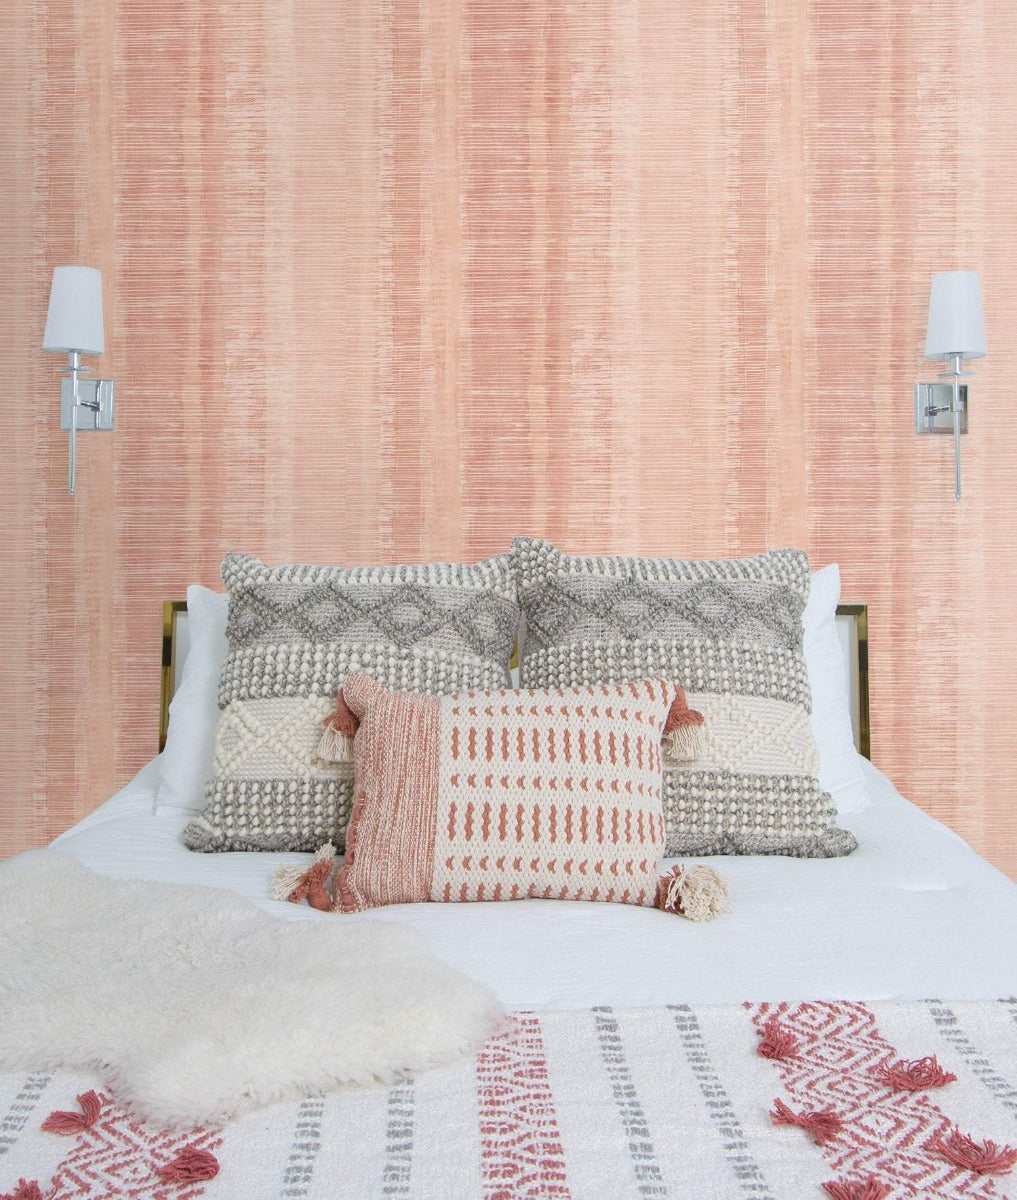 Seabrook Designs Tikki Natural Ombre Pink Sunset Wallpaper